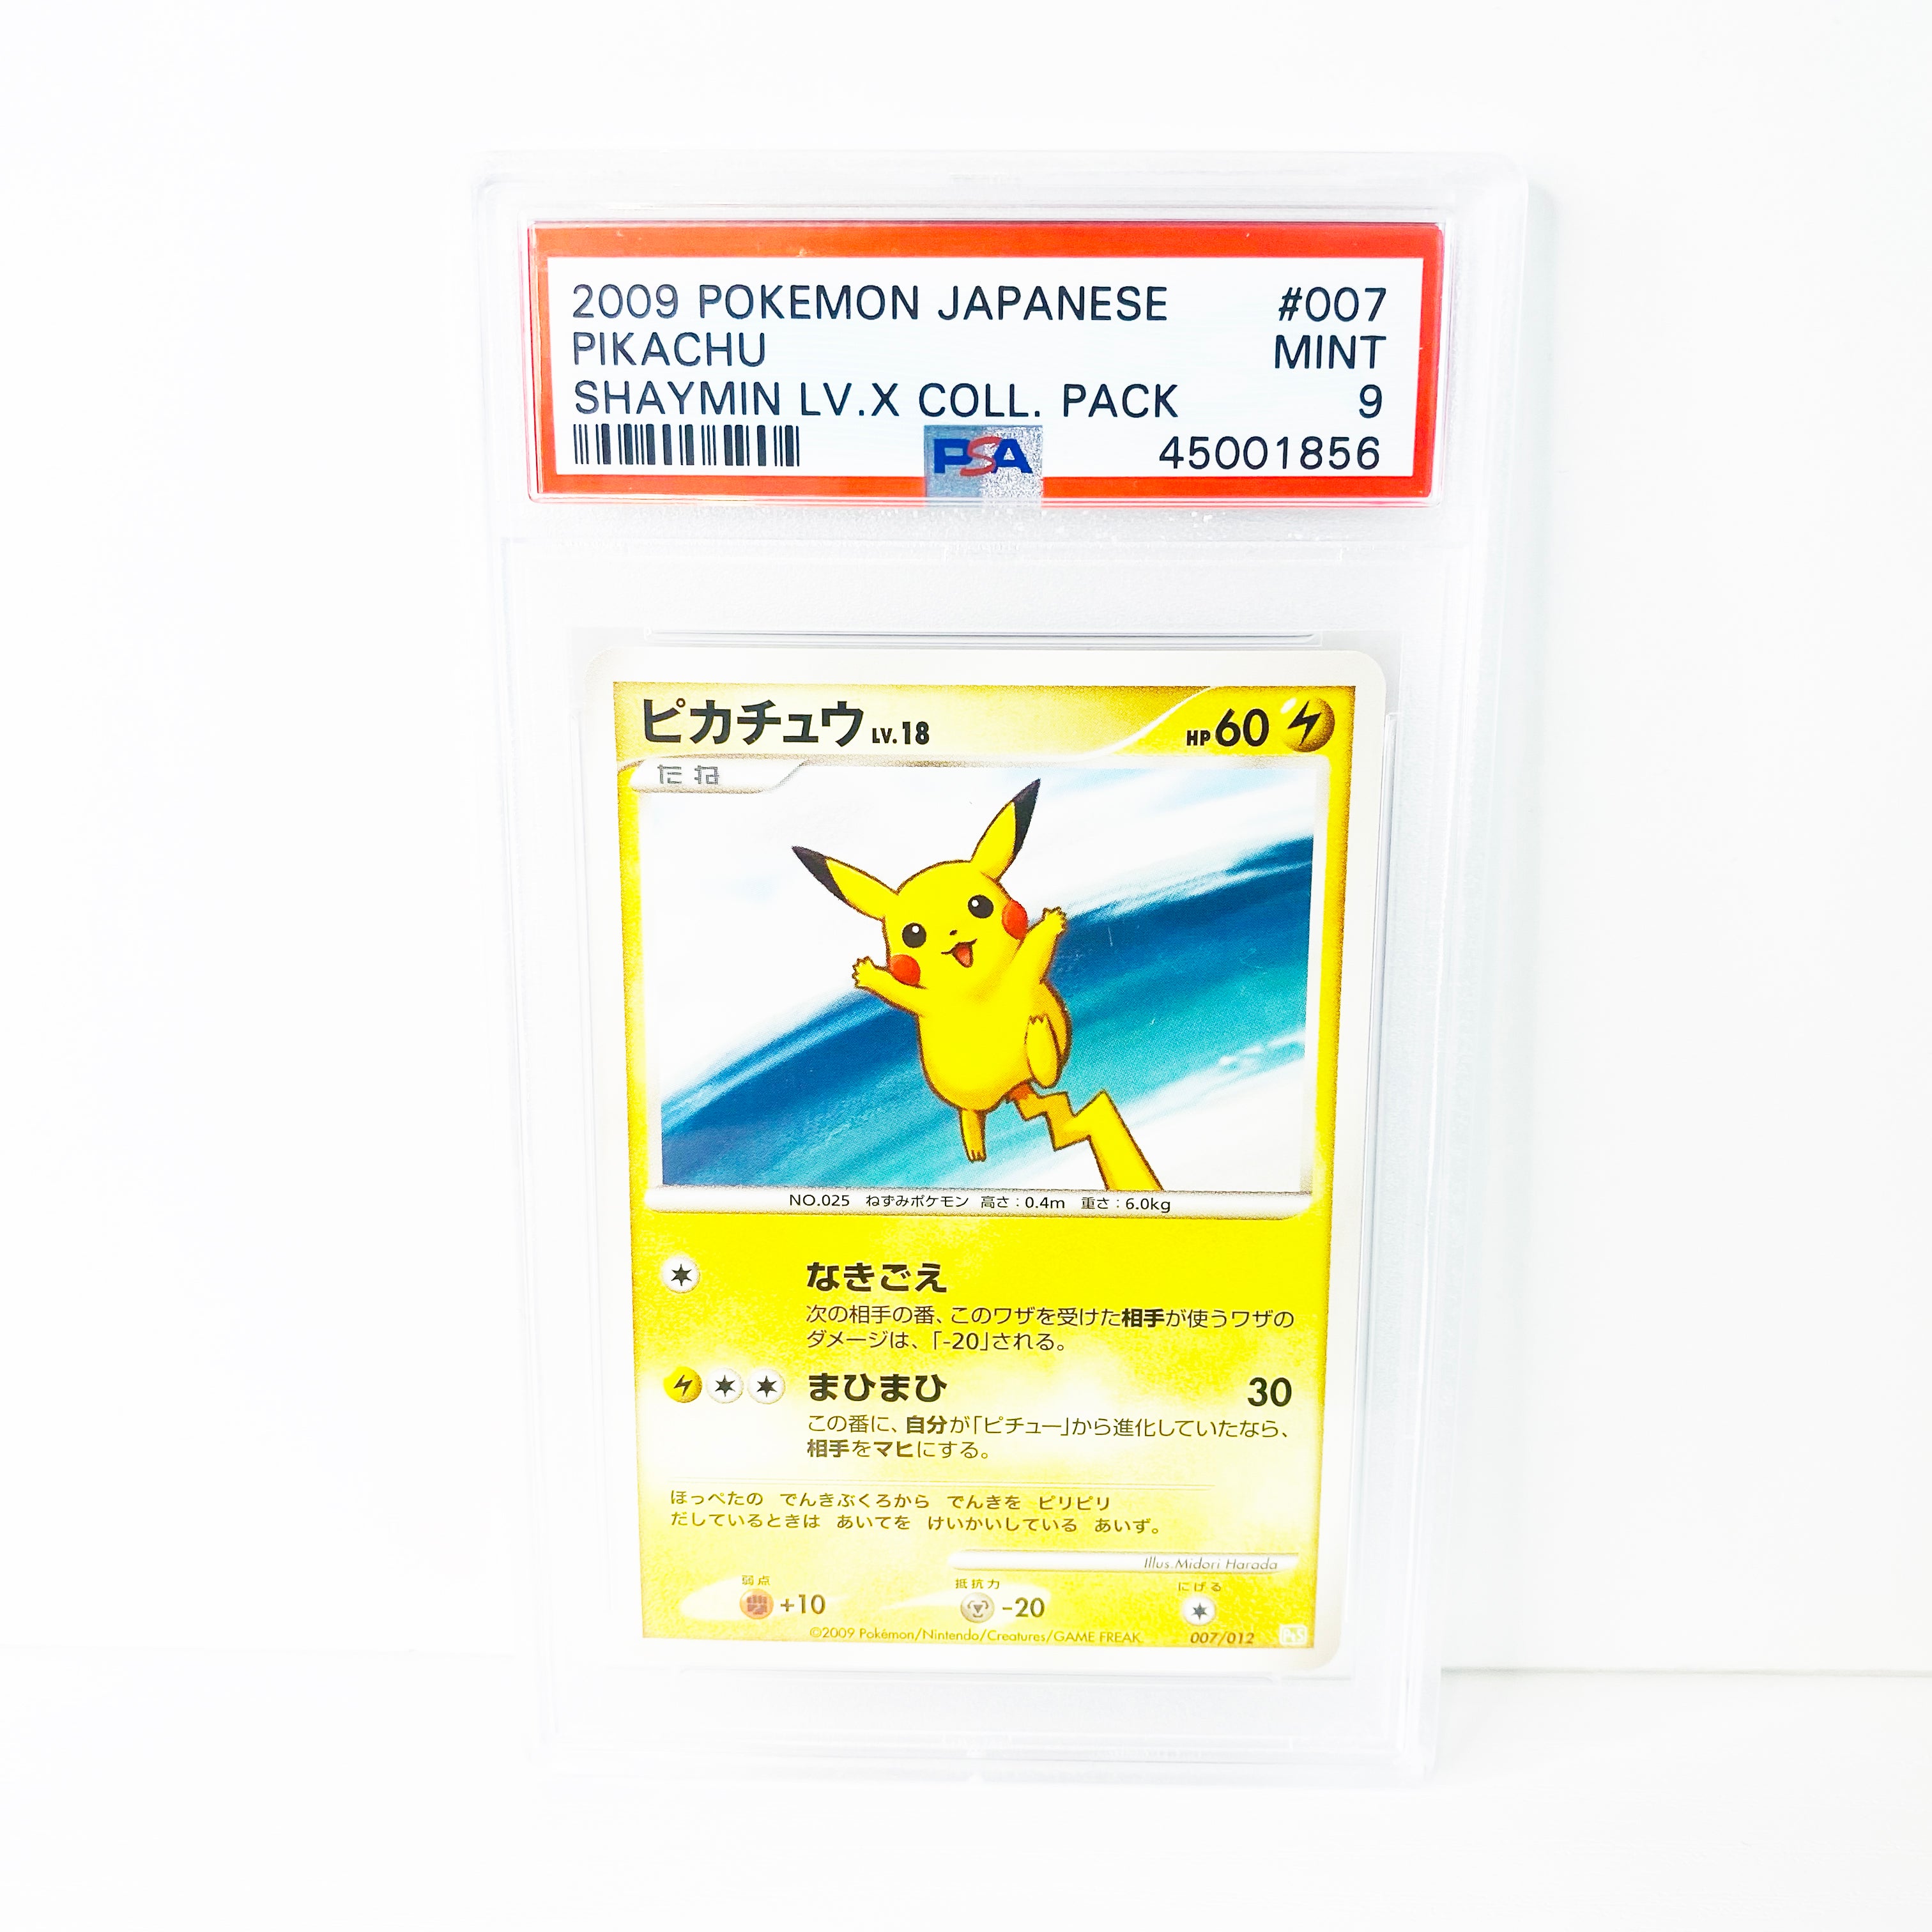 PSA 9 Gem Mint Pikachu 007/012 Shaymin LV.X Collect Pack 2009 Japanese